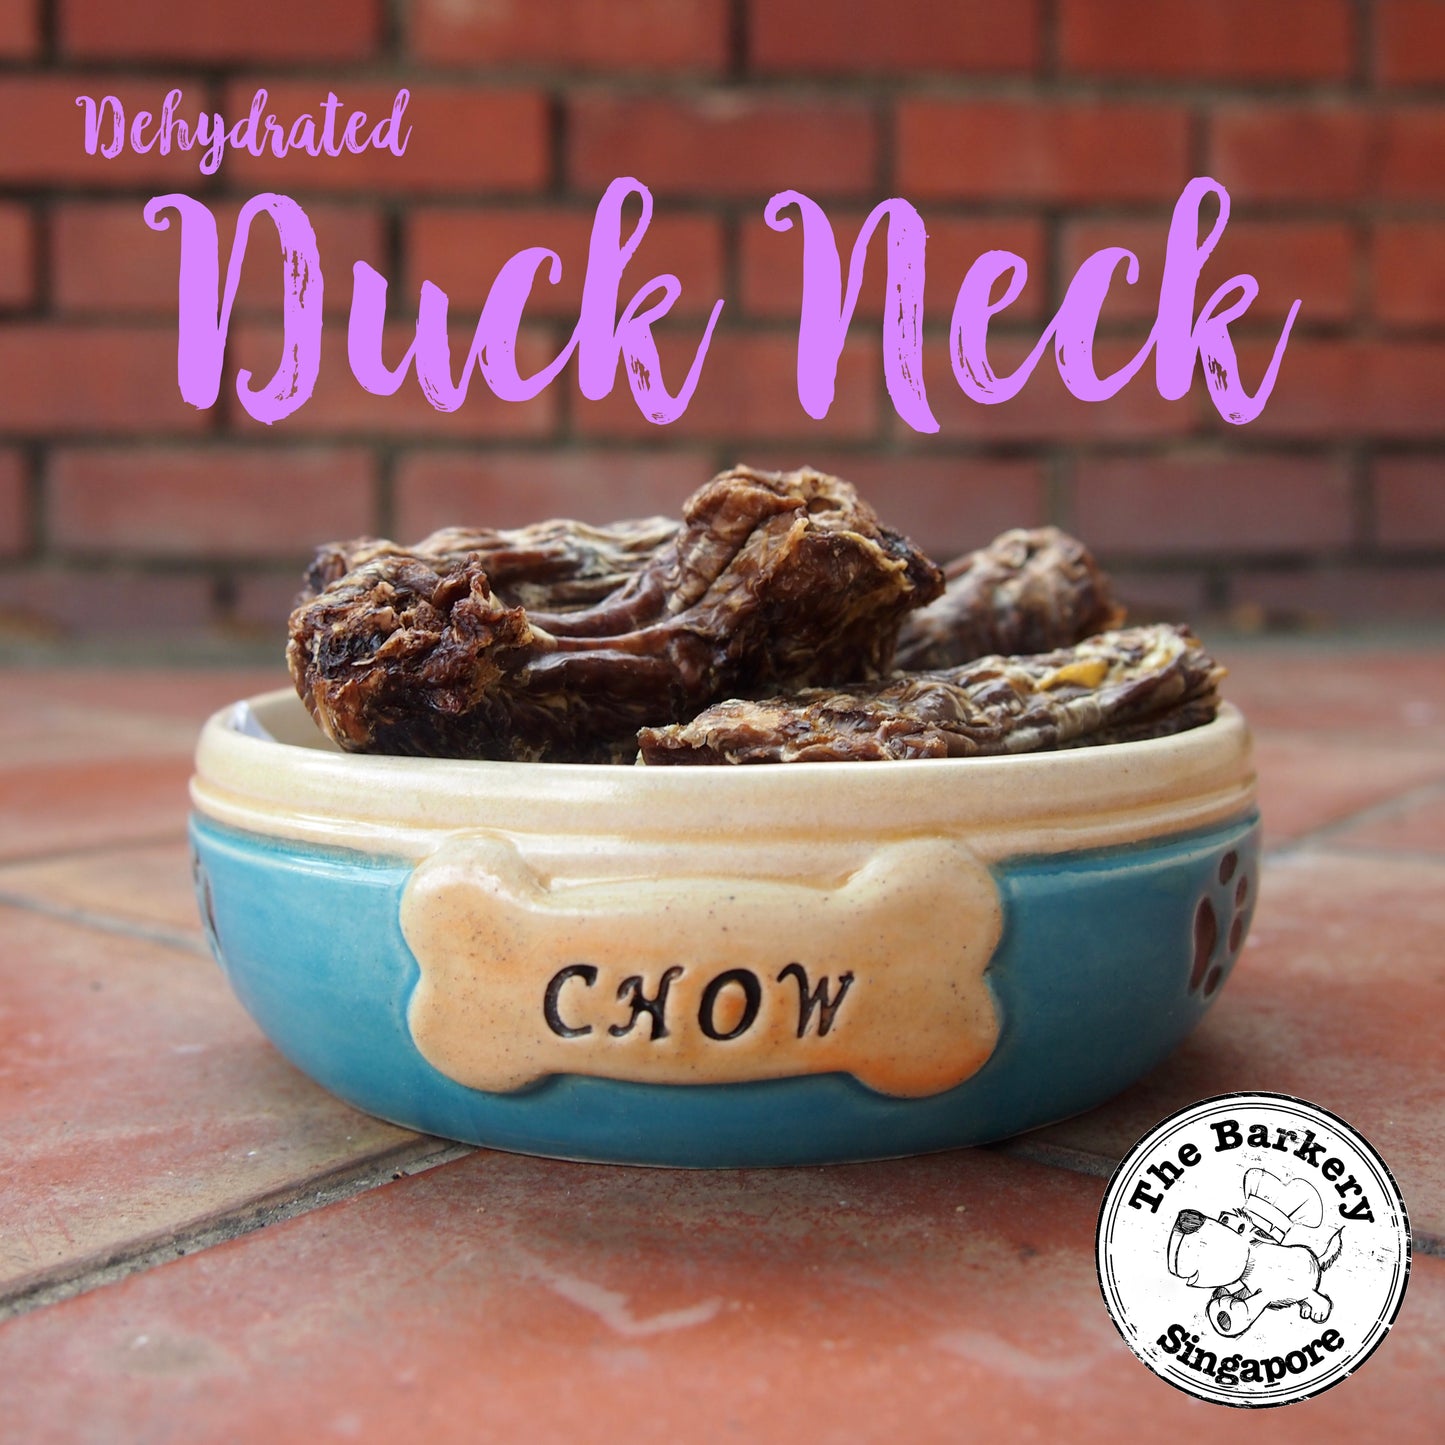 Duck Neck